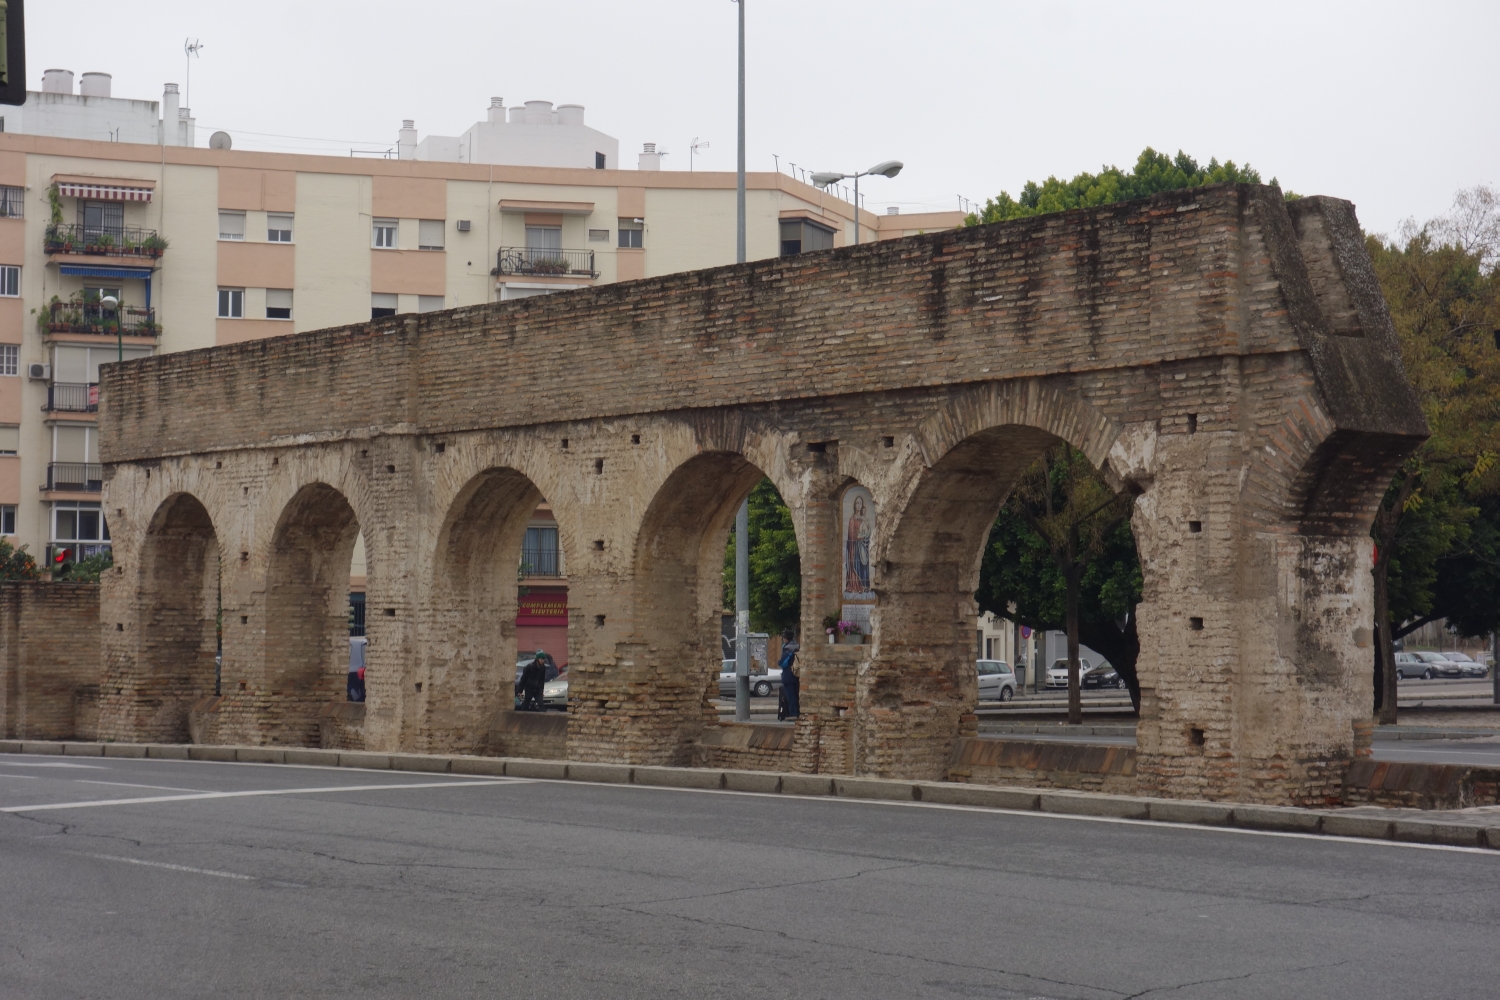 Caños de Carmona - Remains of the aqueduct near Calle Puerta de Carmona, seen from the south